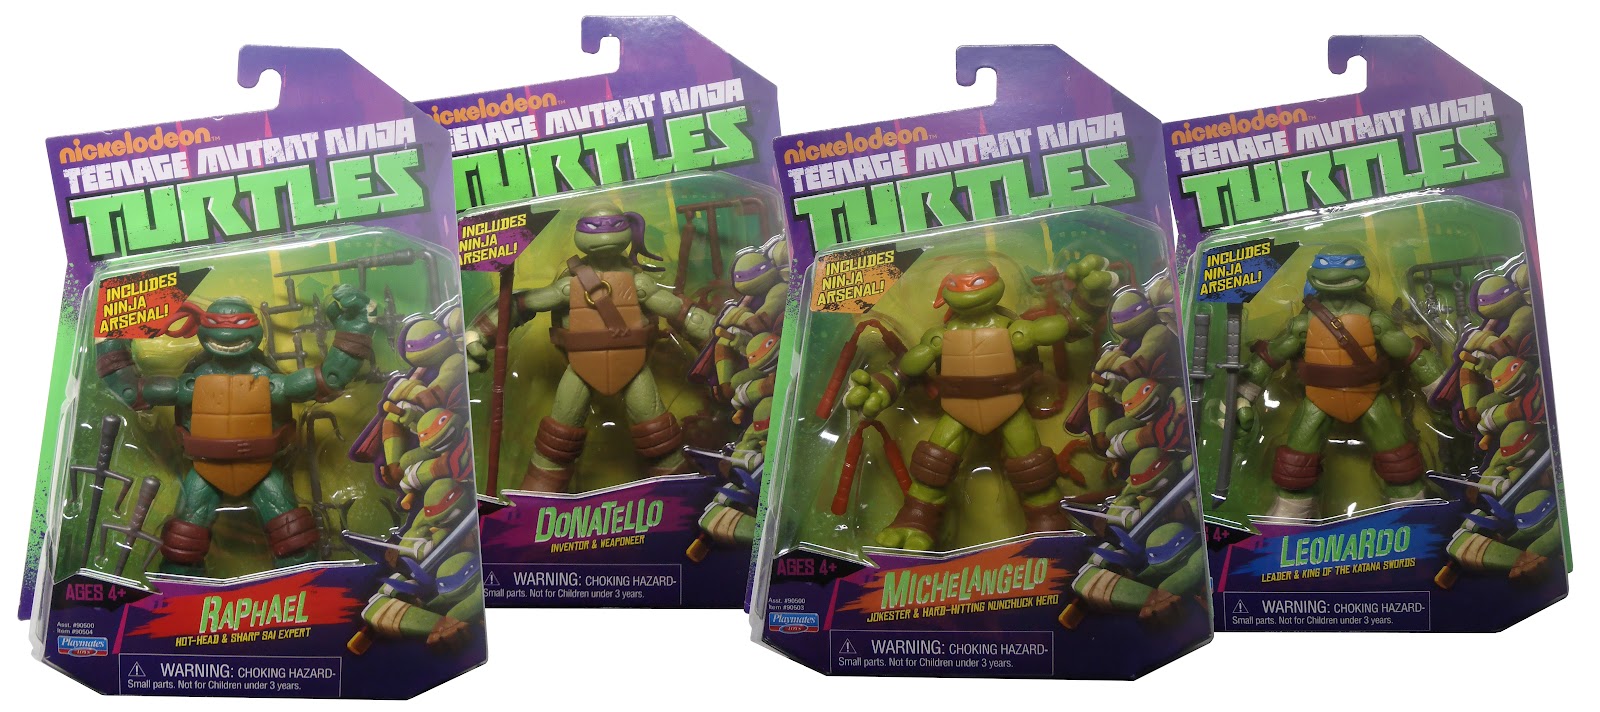 Michelangelo TMNT Teenage Mutant Ninja Turtles Action Figure 2012  Nickelodeon